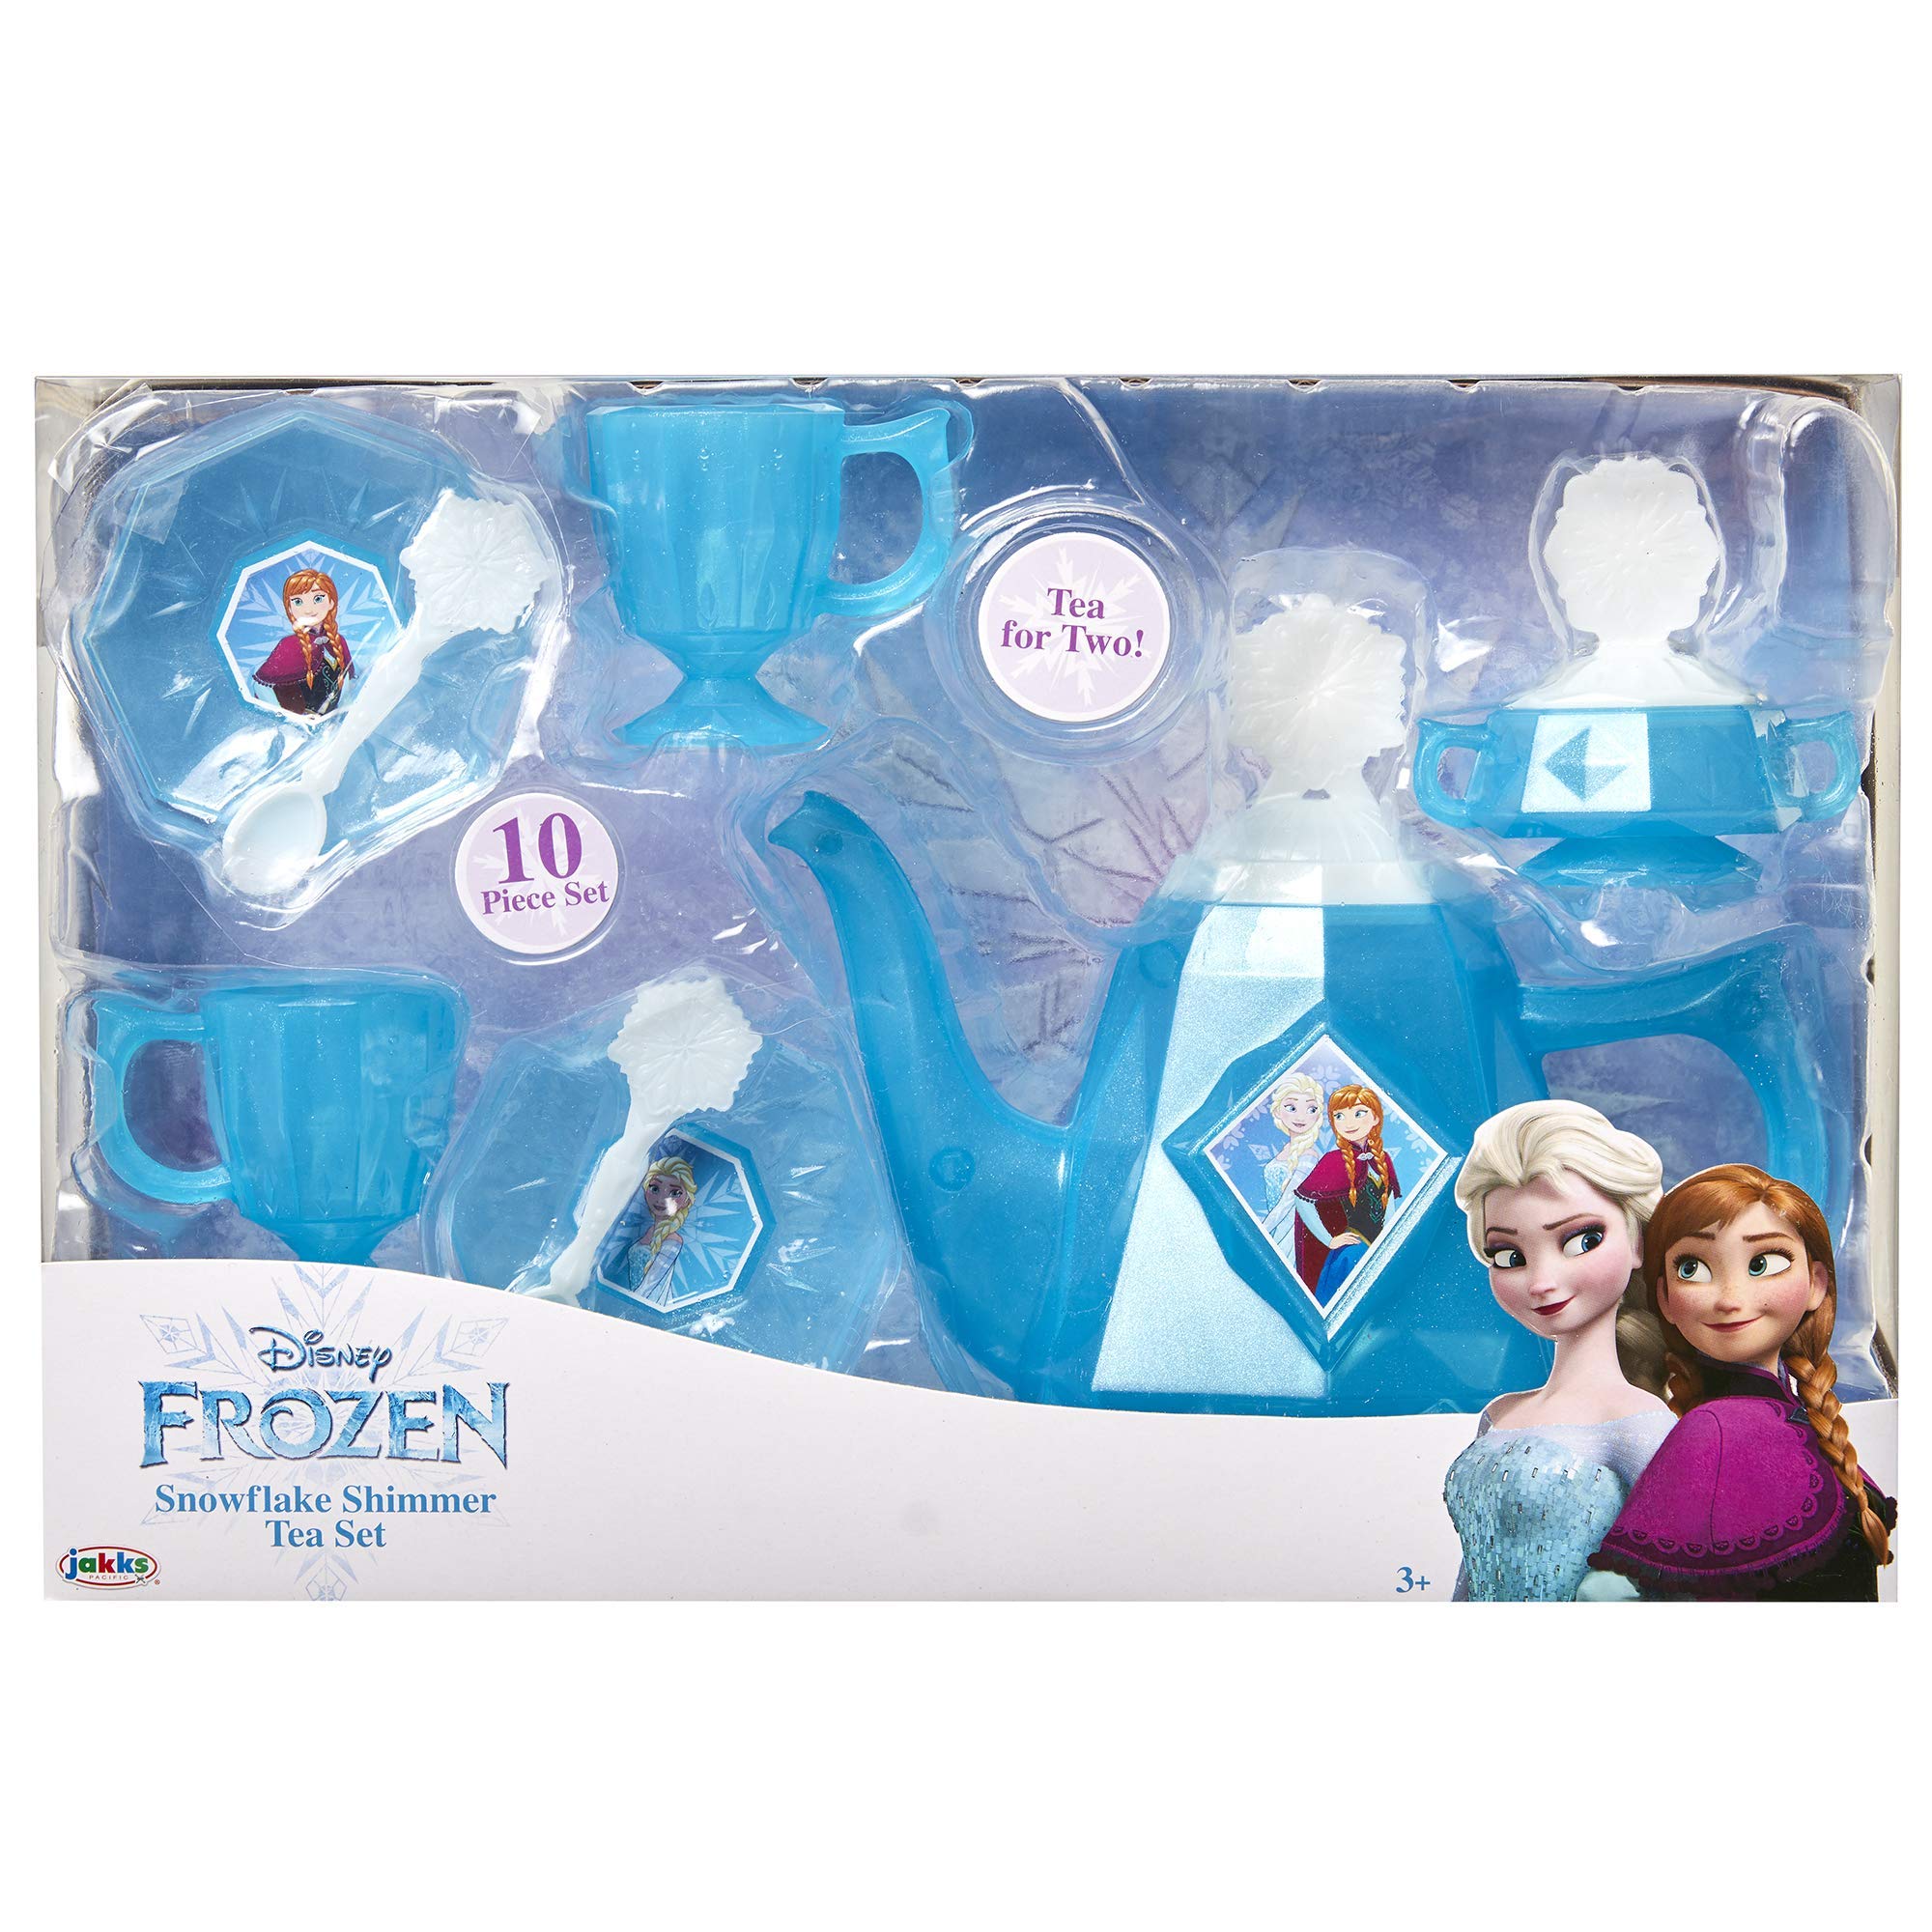 Disney Frozen Tea Set for Girls - 10 Piece Tea Party Set - Pretend Tea Time Play Kitchen Toy, Blue